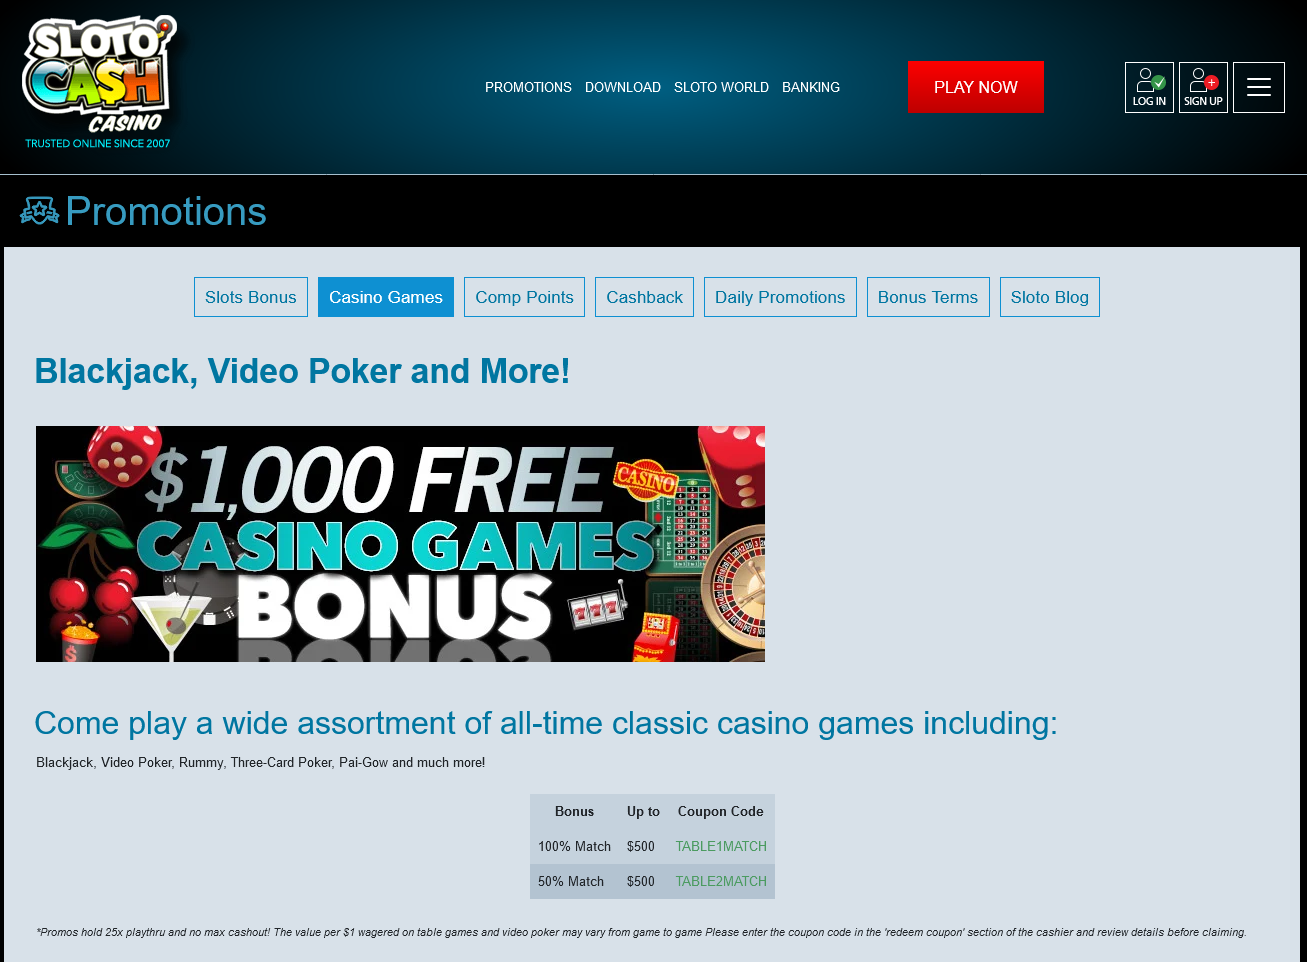 Slotocash Casino Games Promo
                                  Page